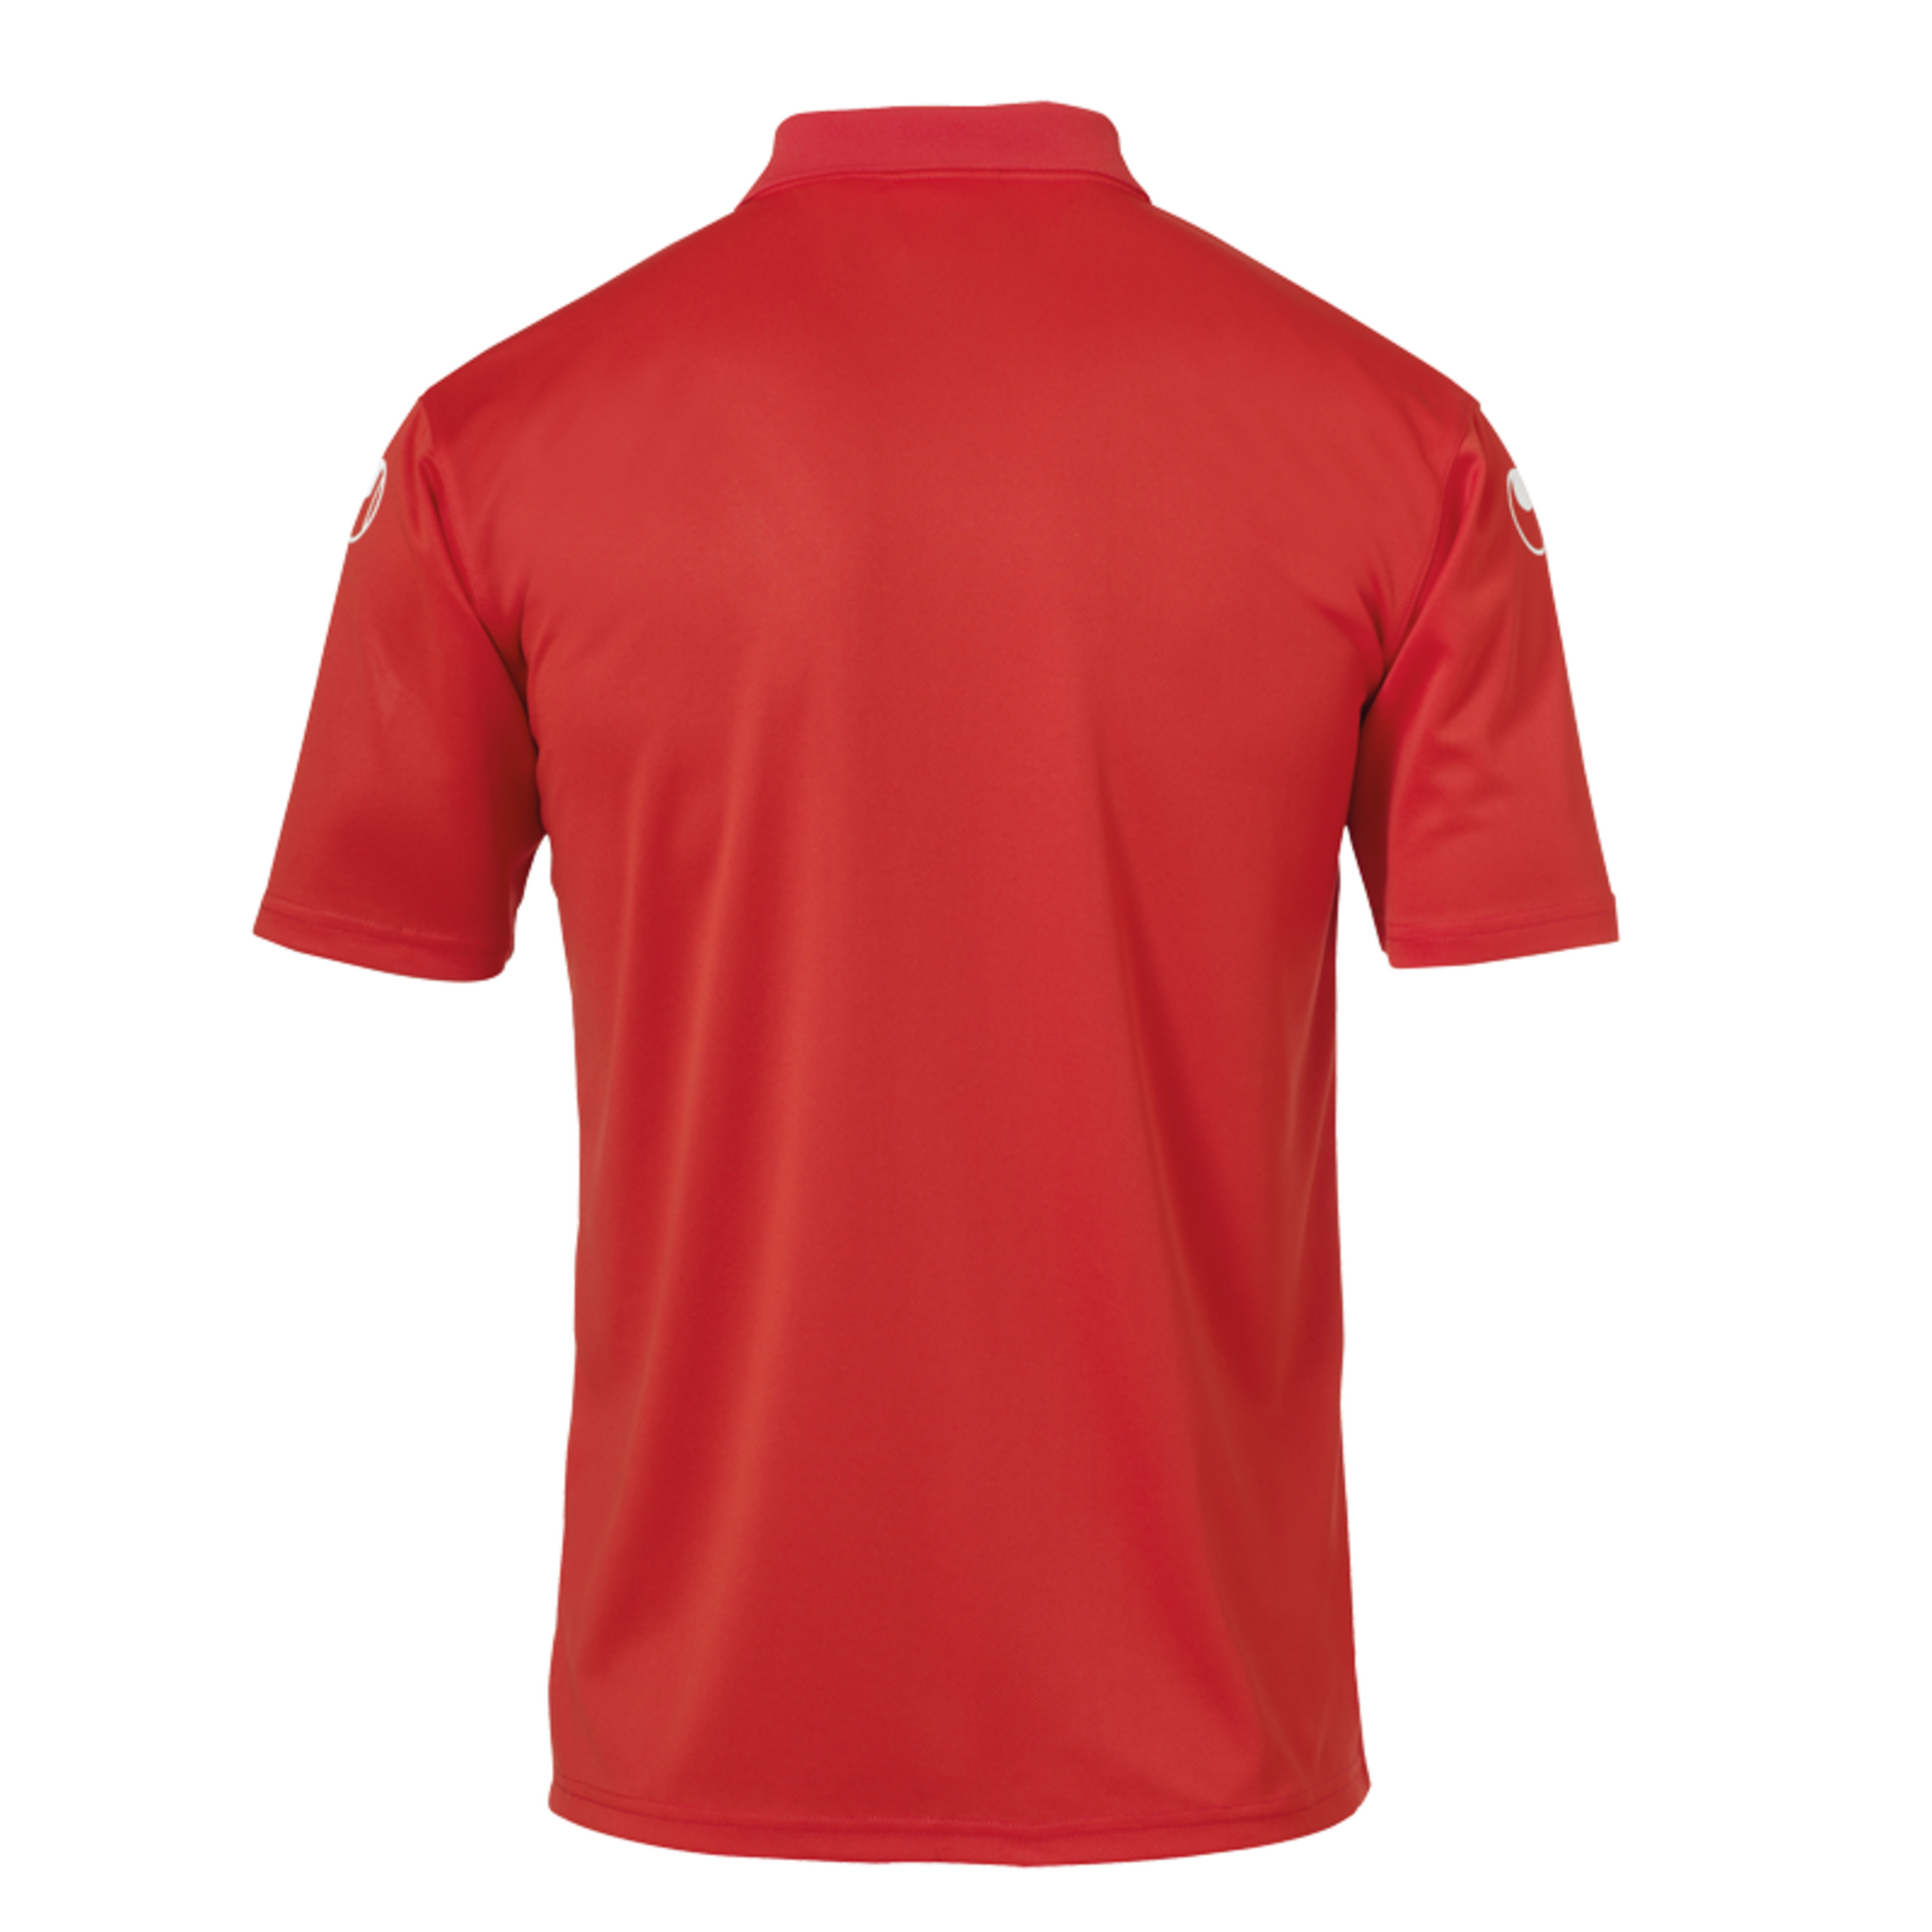 Score Polo Shirt Rojo/blanco Uhlsport